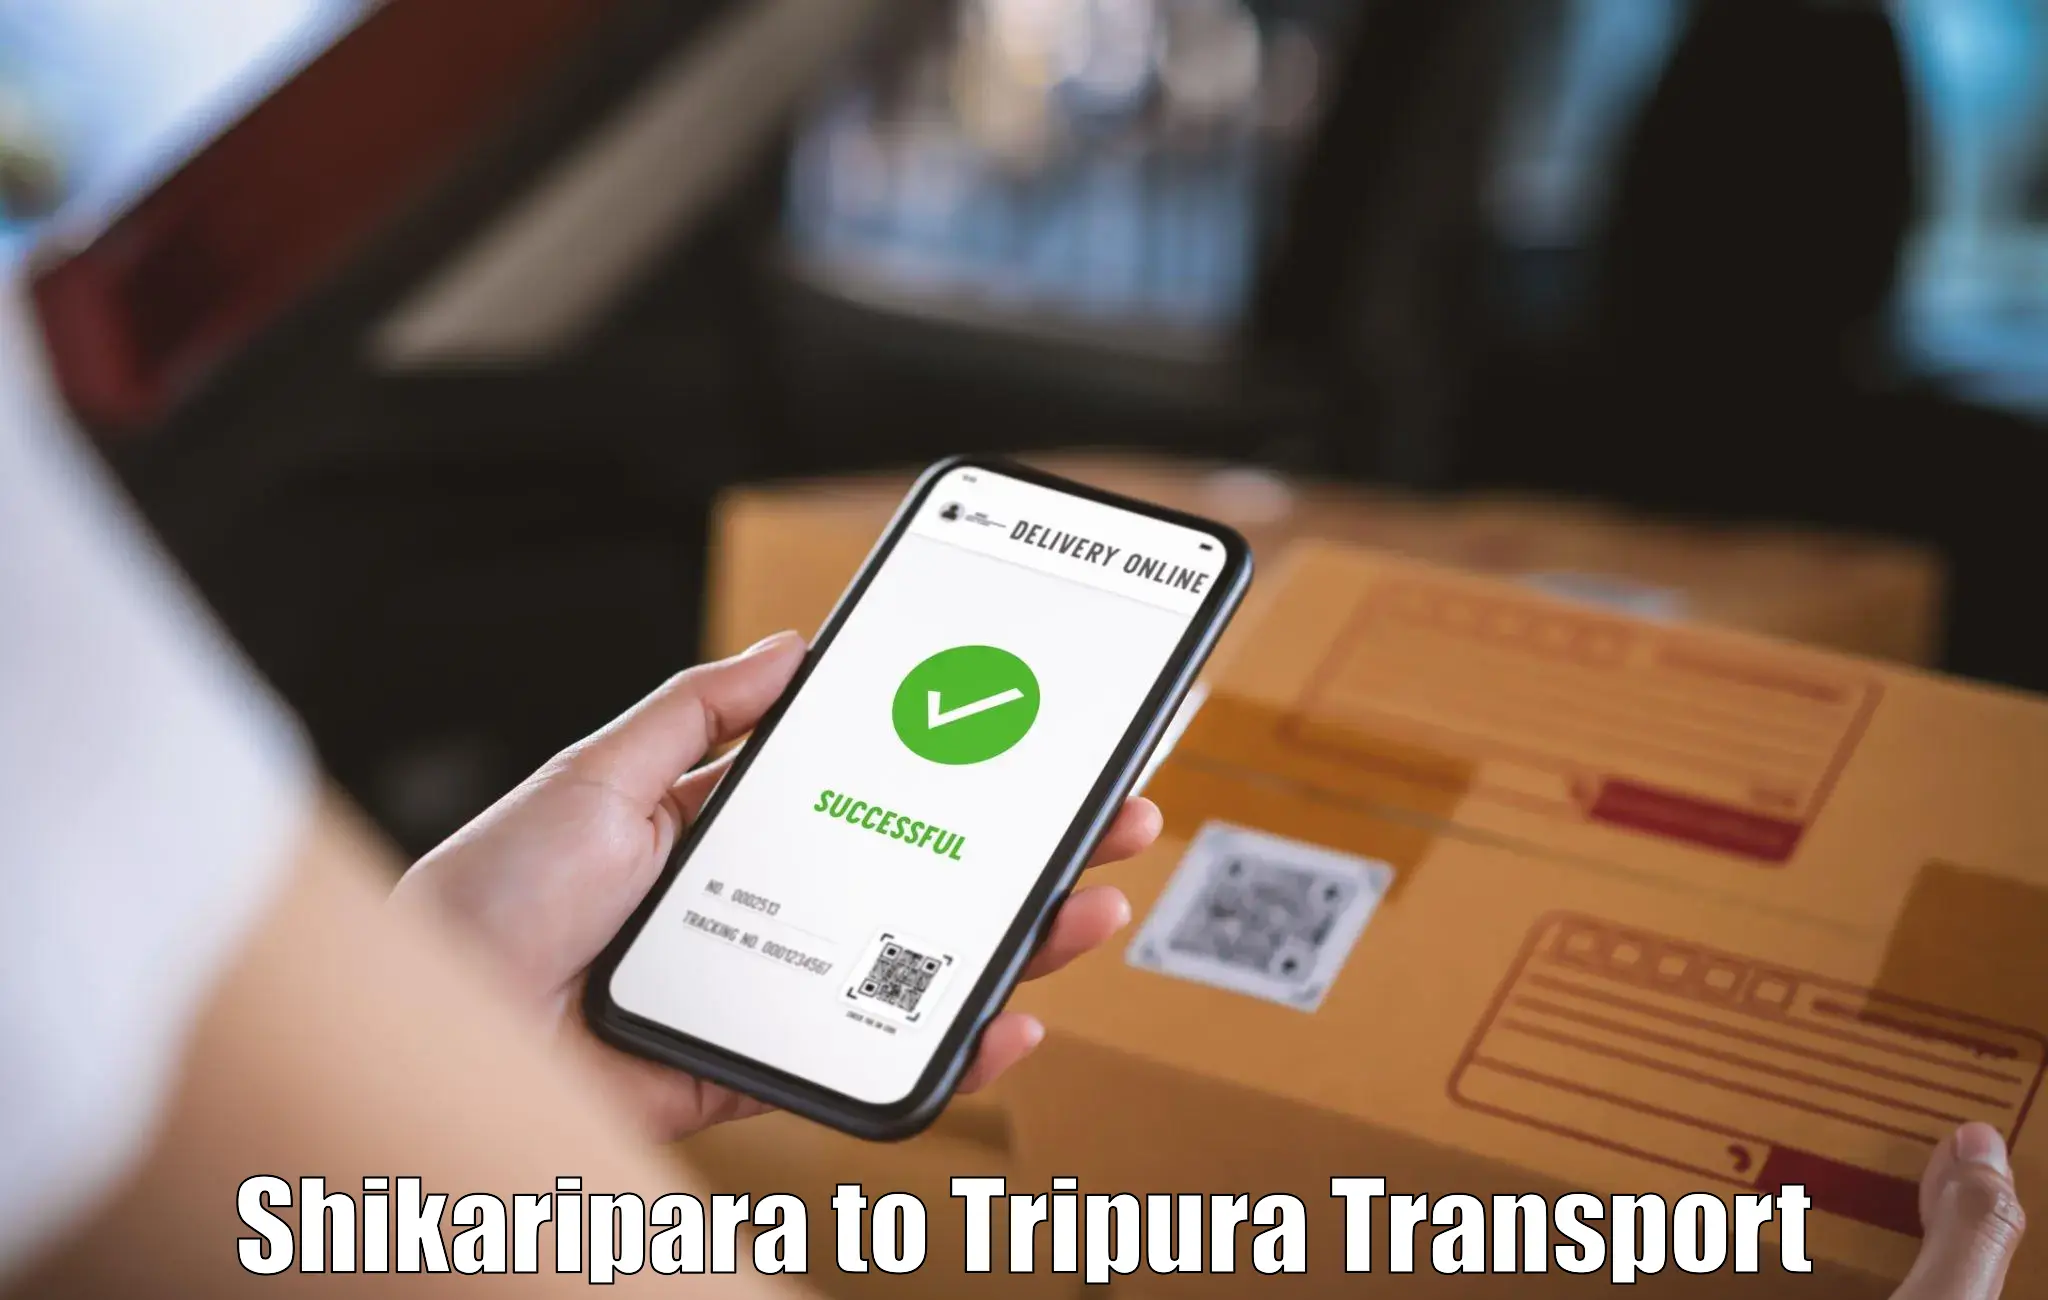 Road transport online services Shikaripara to Khowai